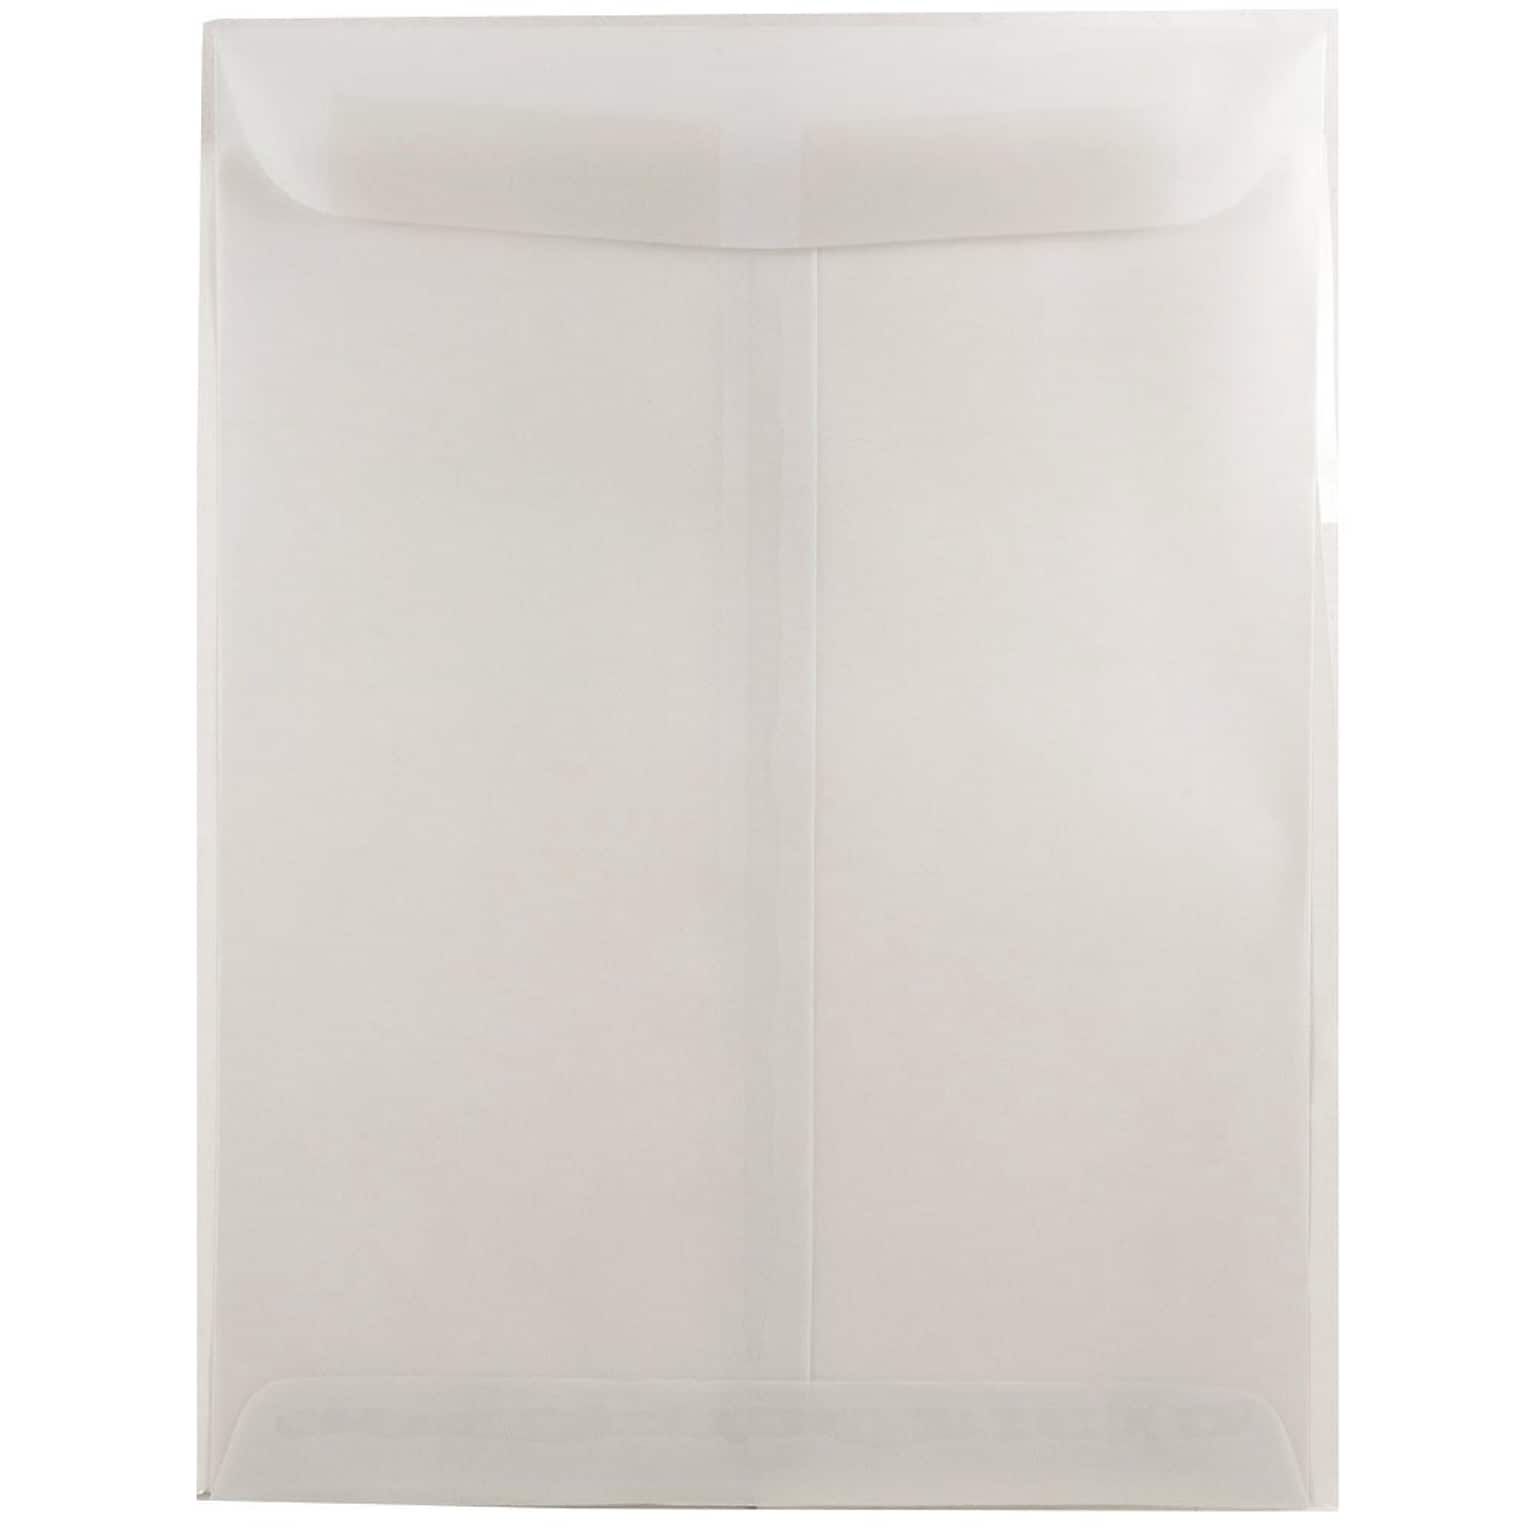 JAM Paper 9 x 12 Open End Catalog Translucent Vellum Envelopes, Clear, 50/Pack (2851376i)